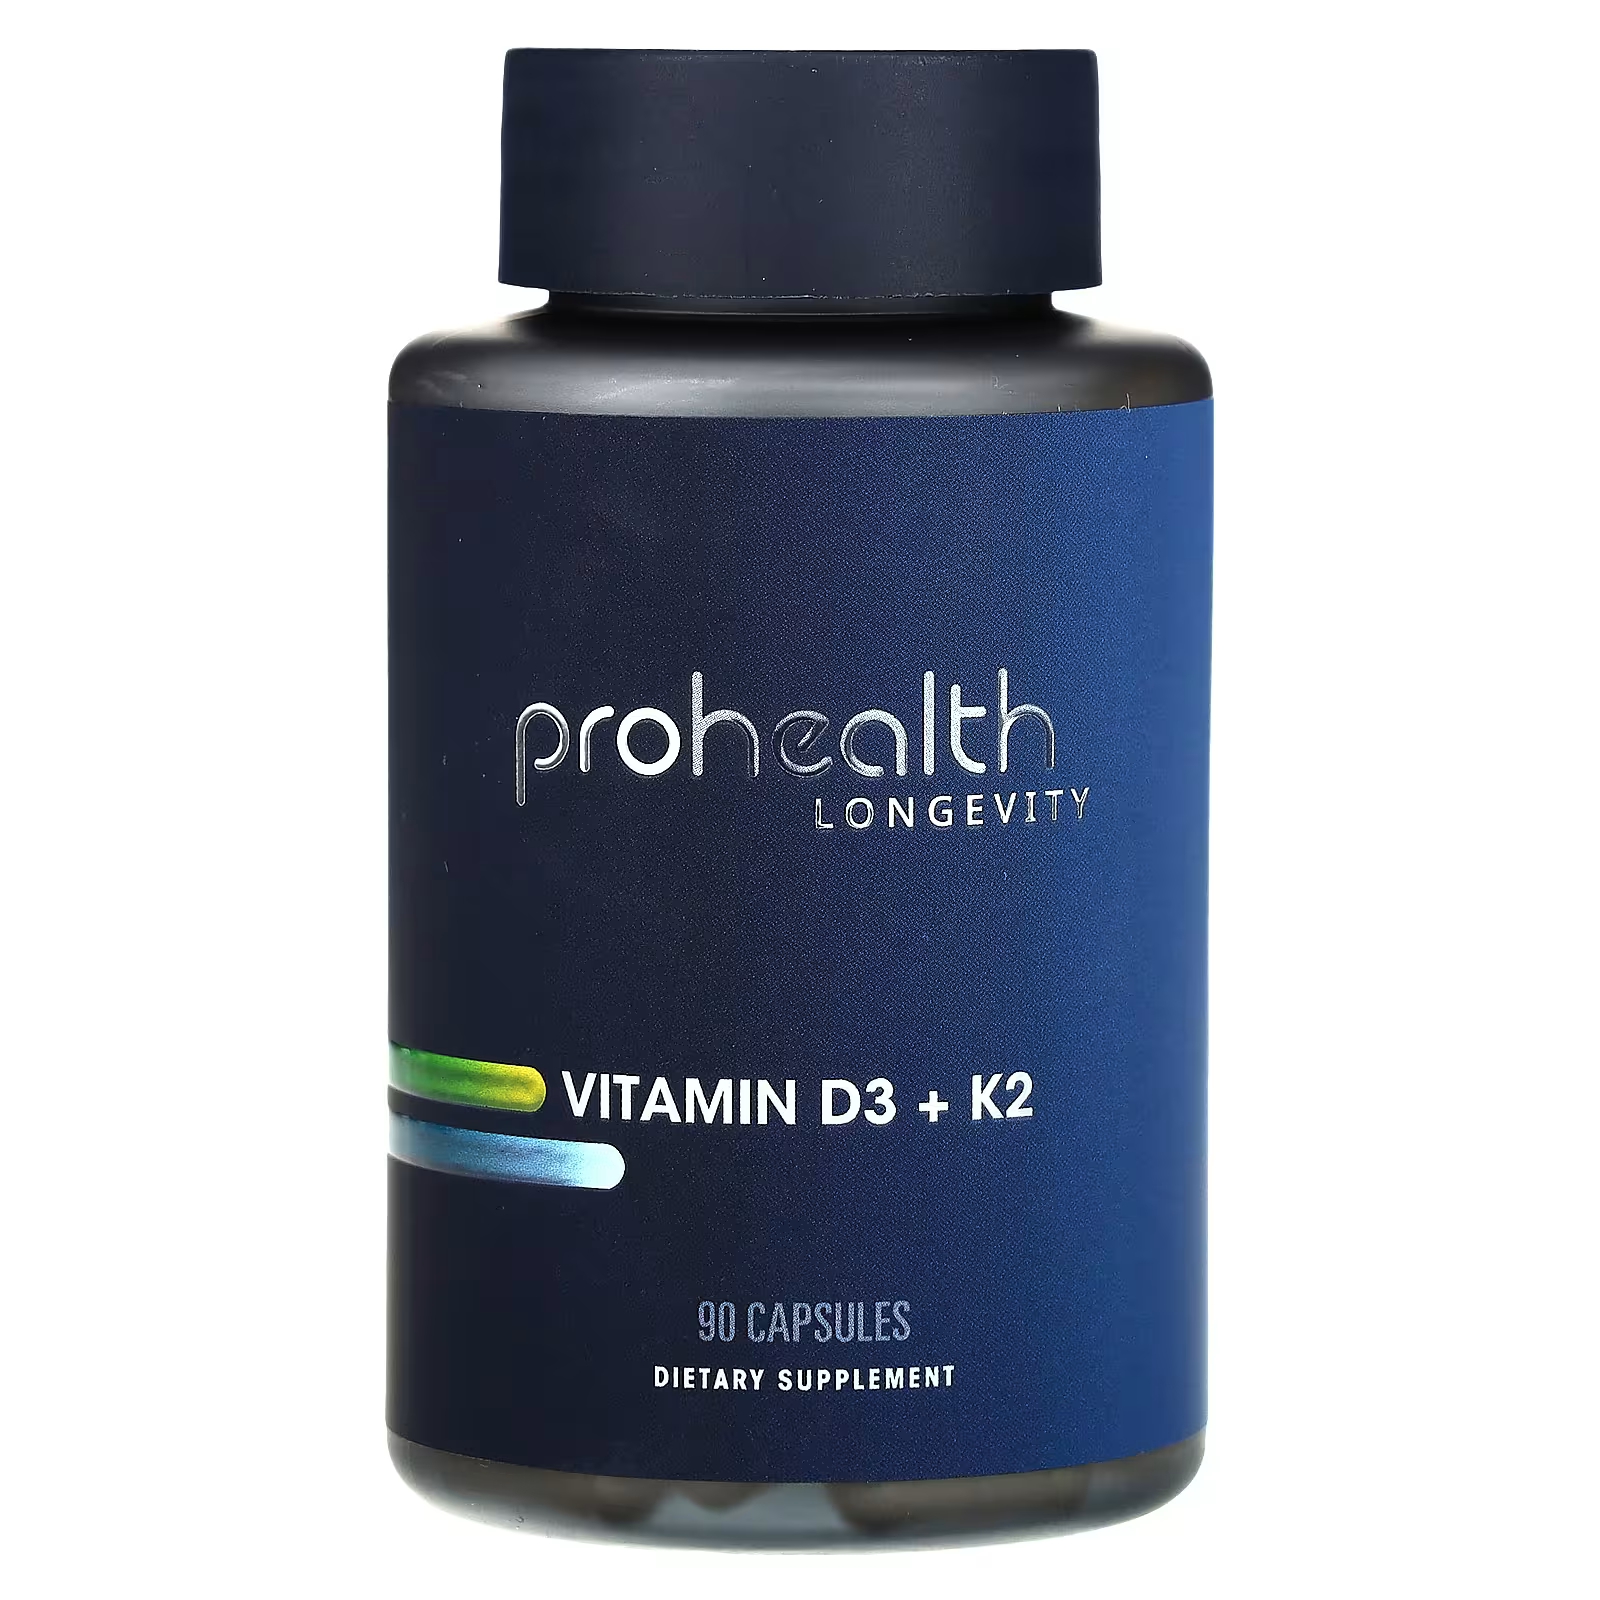 ProHealth Витамин D3 + K2 долголетия, 90 капсул ProHealth Longevity prohealth longevity energy nadh 12 5 мг 90 таблеток